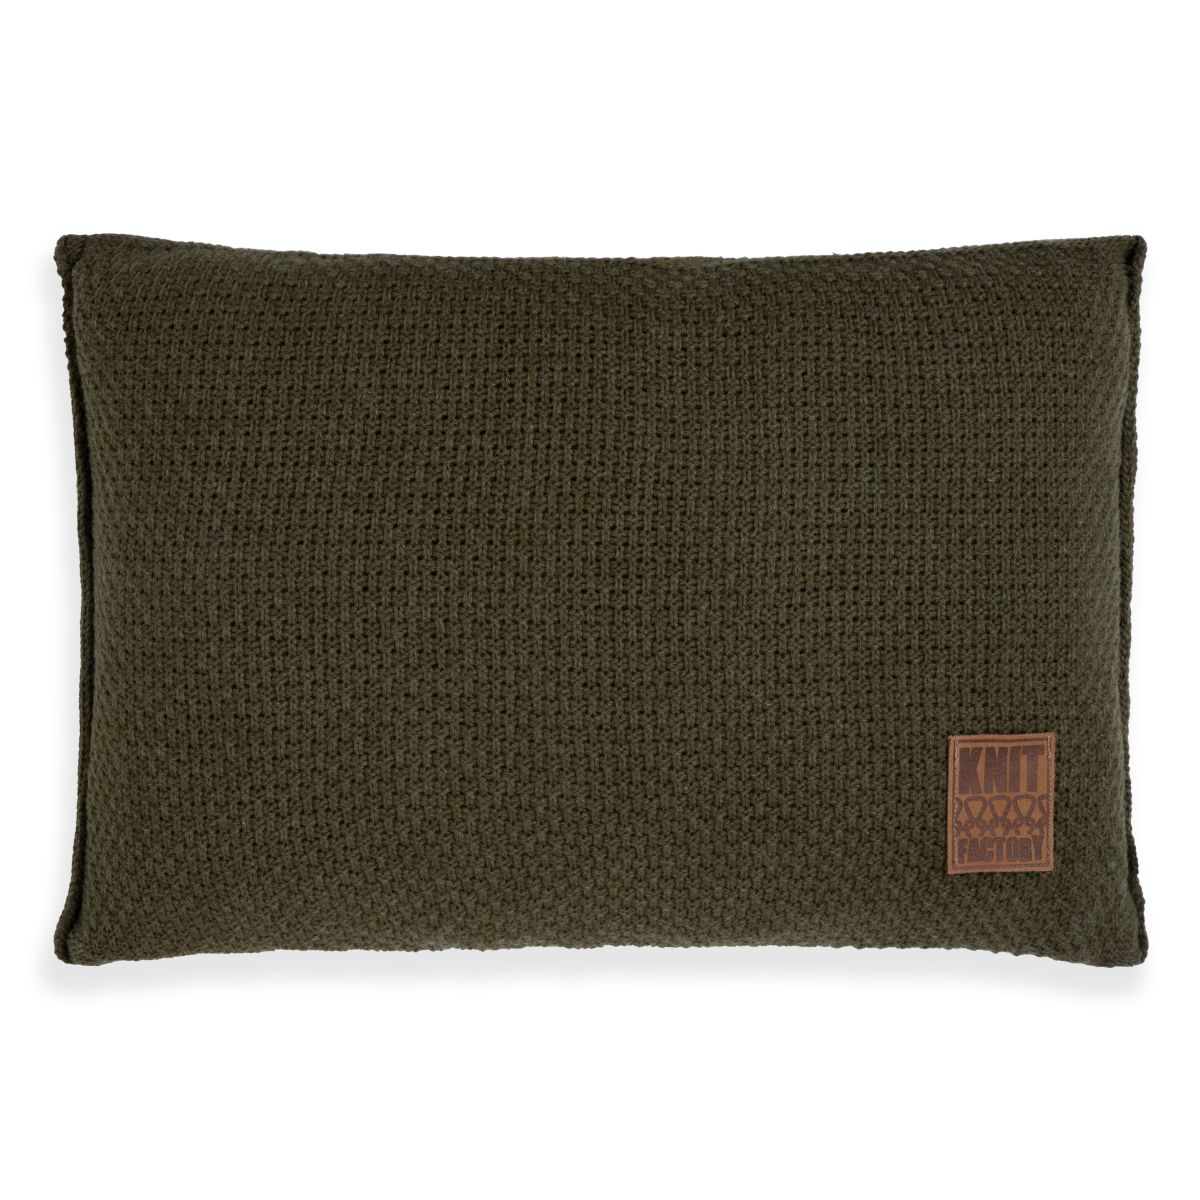 jesse cushion green 60x40